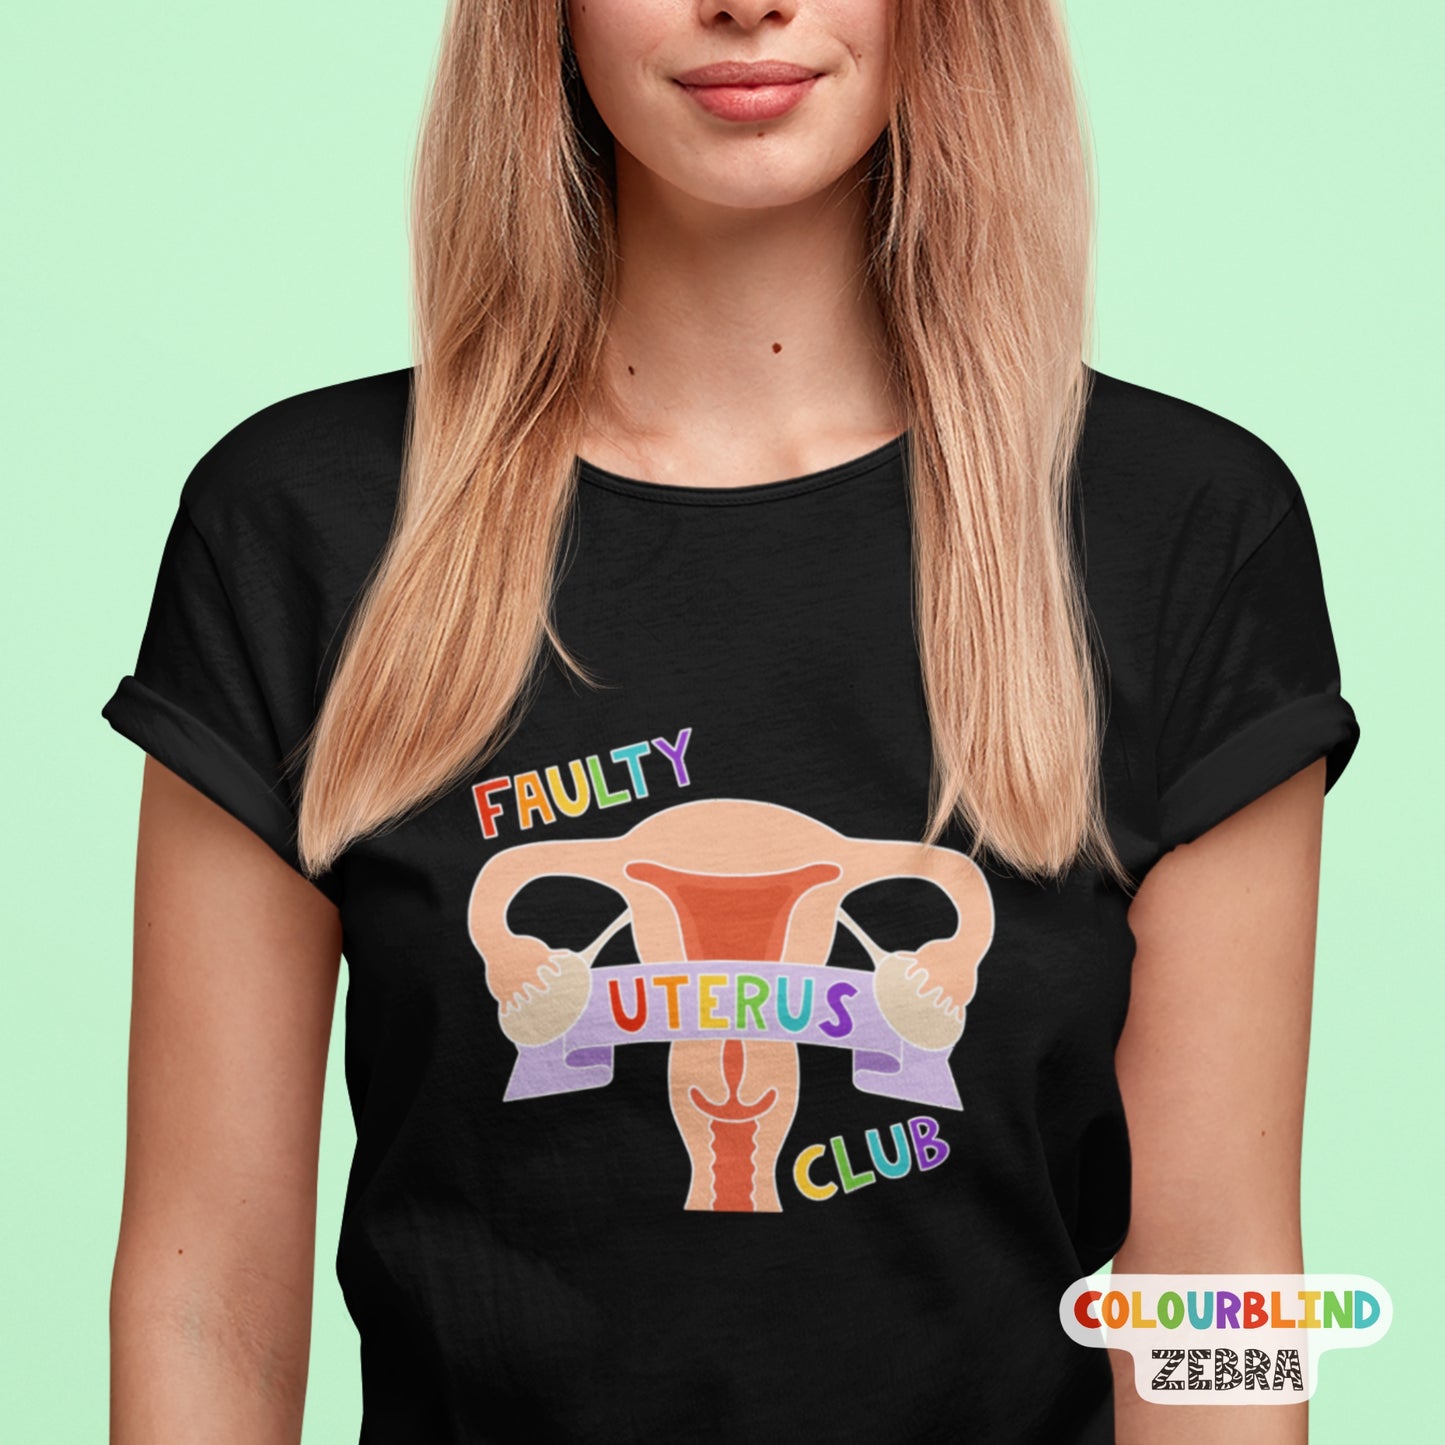 Faulty Uterus Club T-Shirt